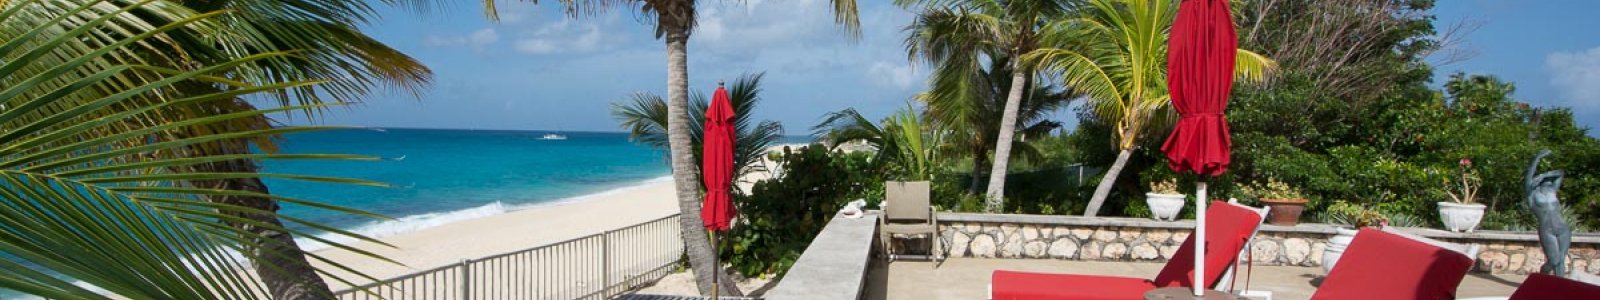 Sint Maarten (Dutch Side) Vacation Villas | Luxury Rentals